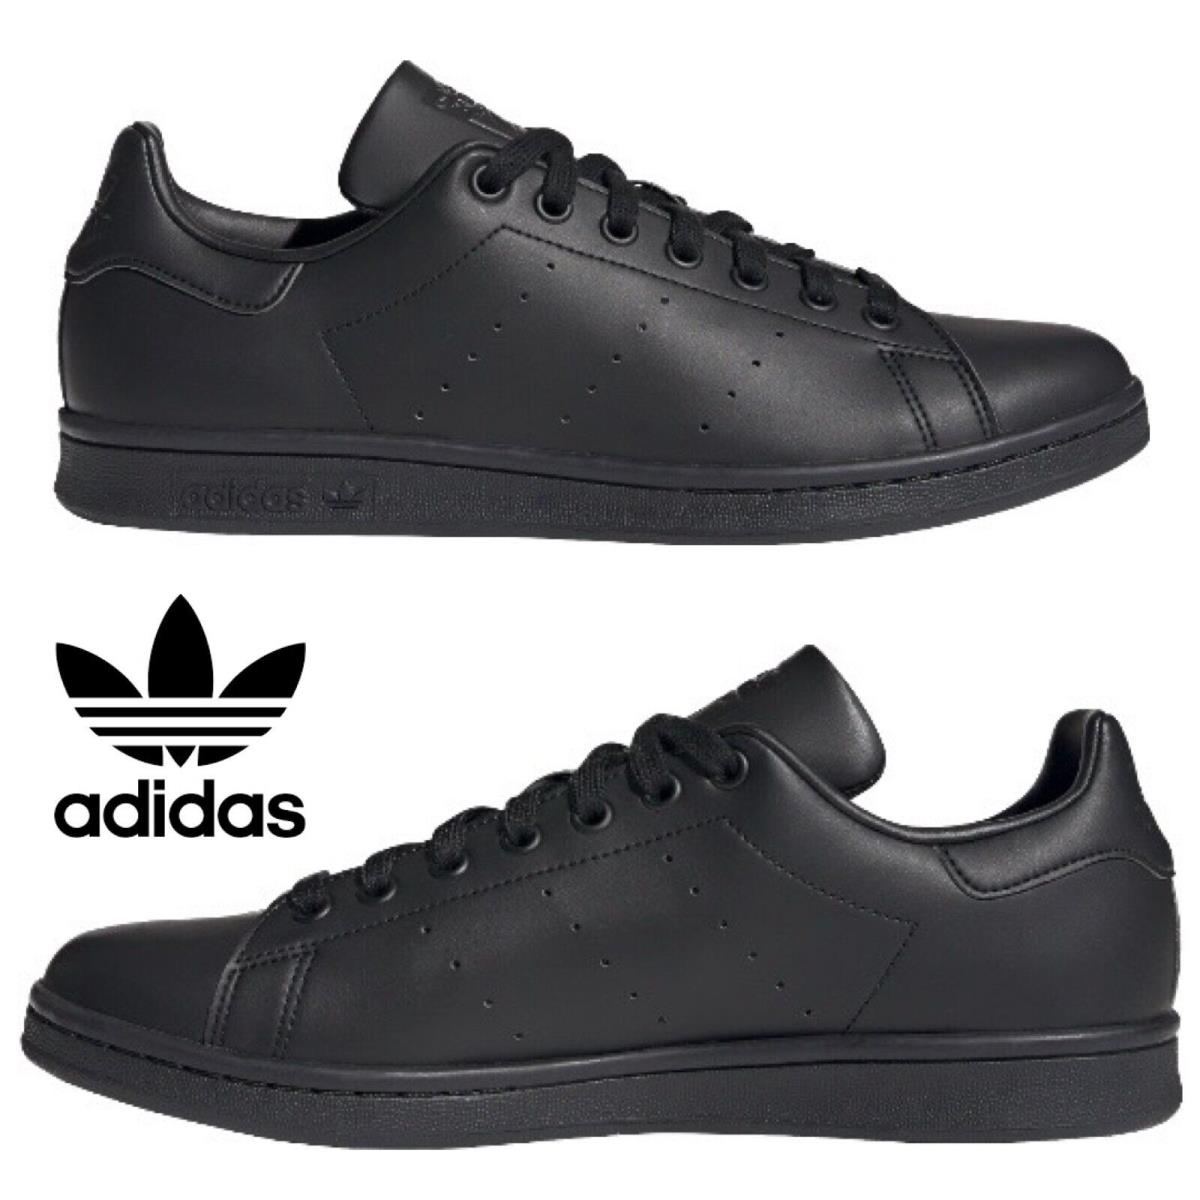 Adidas Originals Stan Smith Men`s Sneakers Comfort Sport Casual Shoes Black